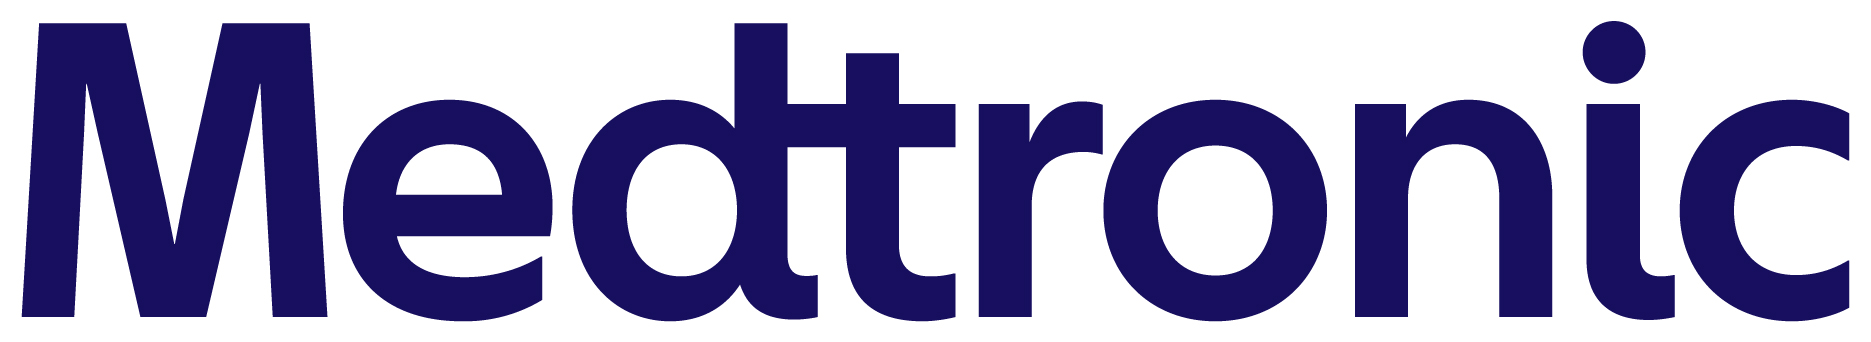 logo for Medtronic Limited